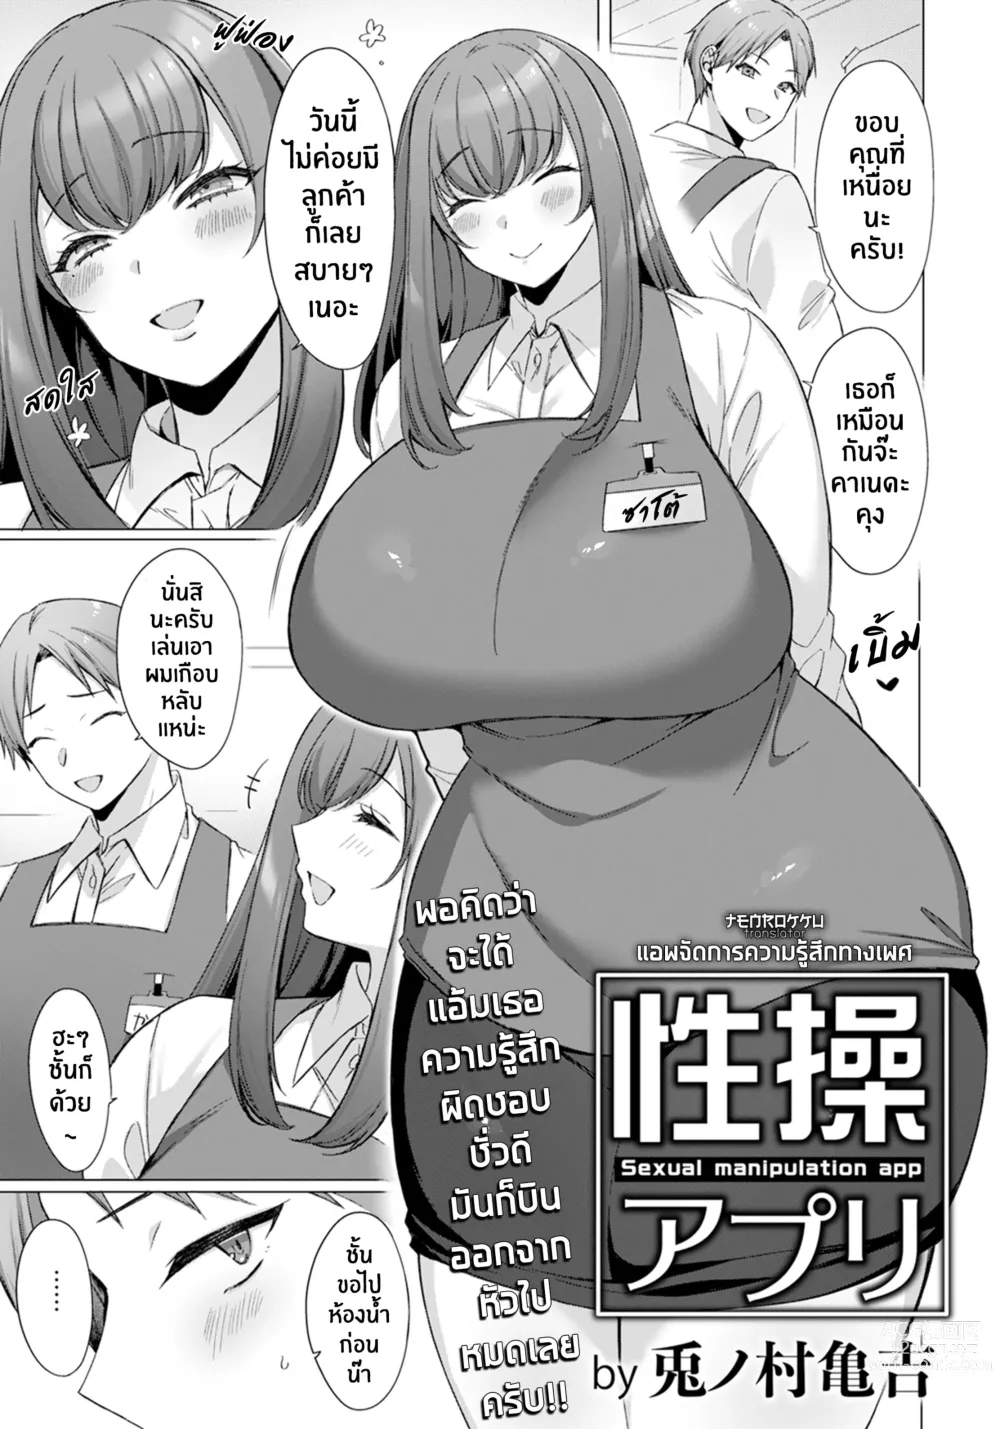 Page 1 of manga แอพจัดการความรู้สึกทางเพศ